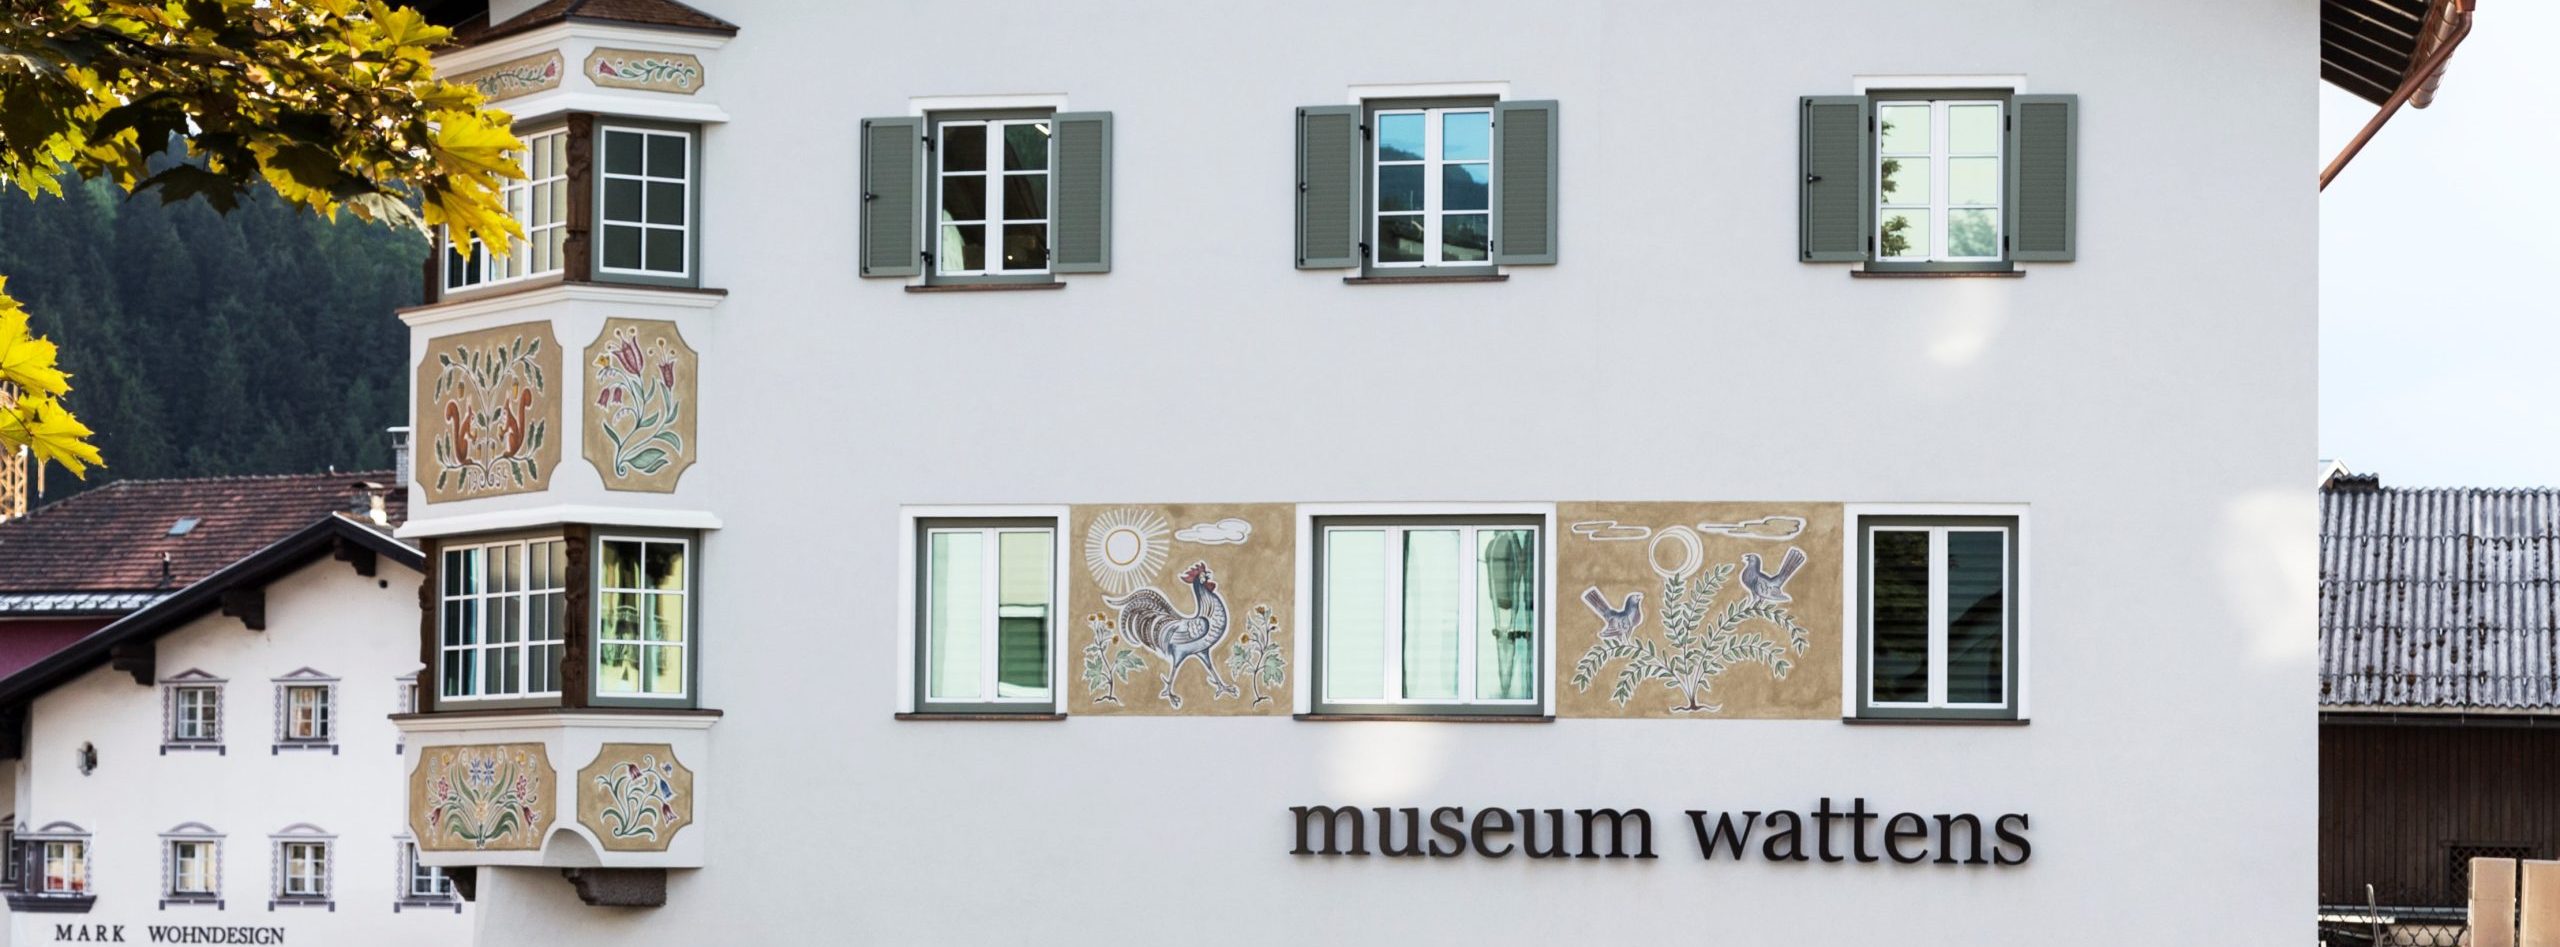 Museumspreis Museum Wattens